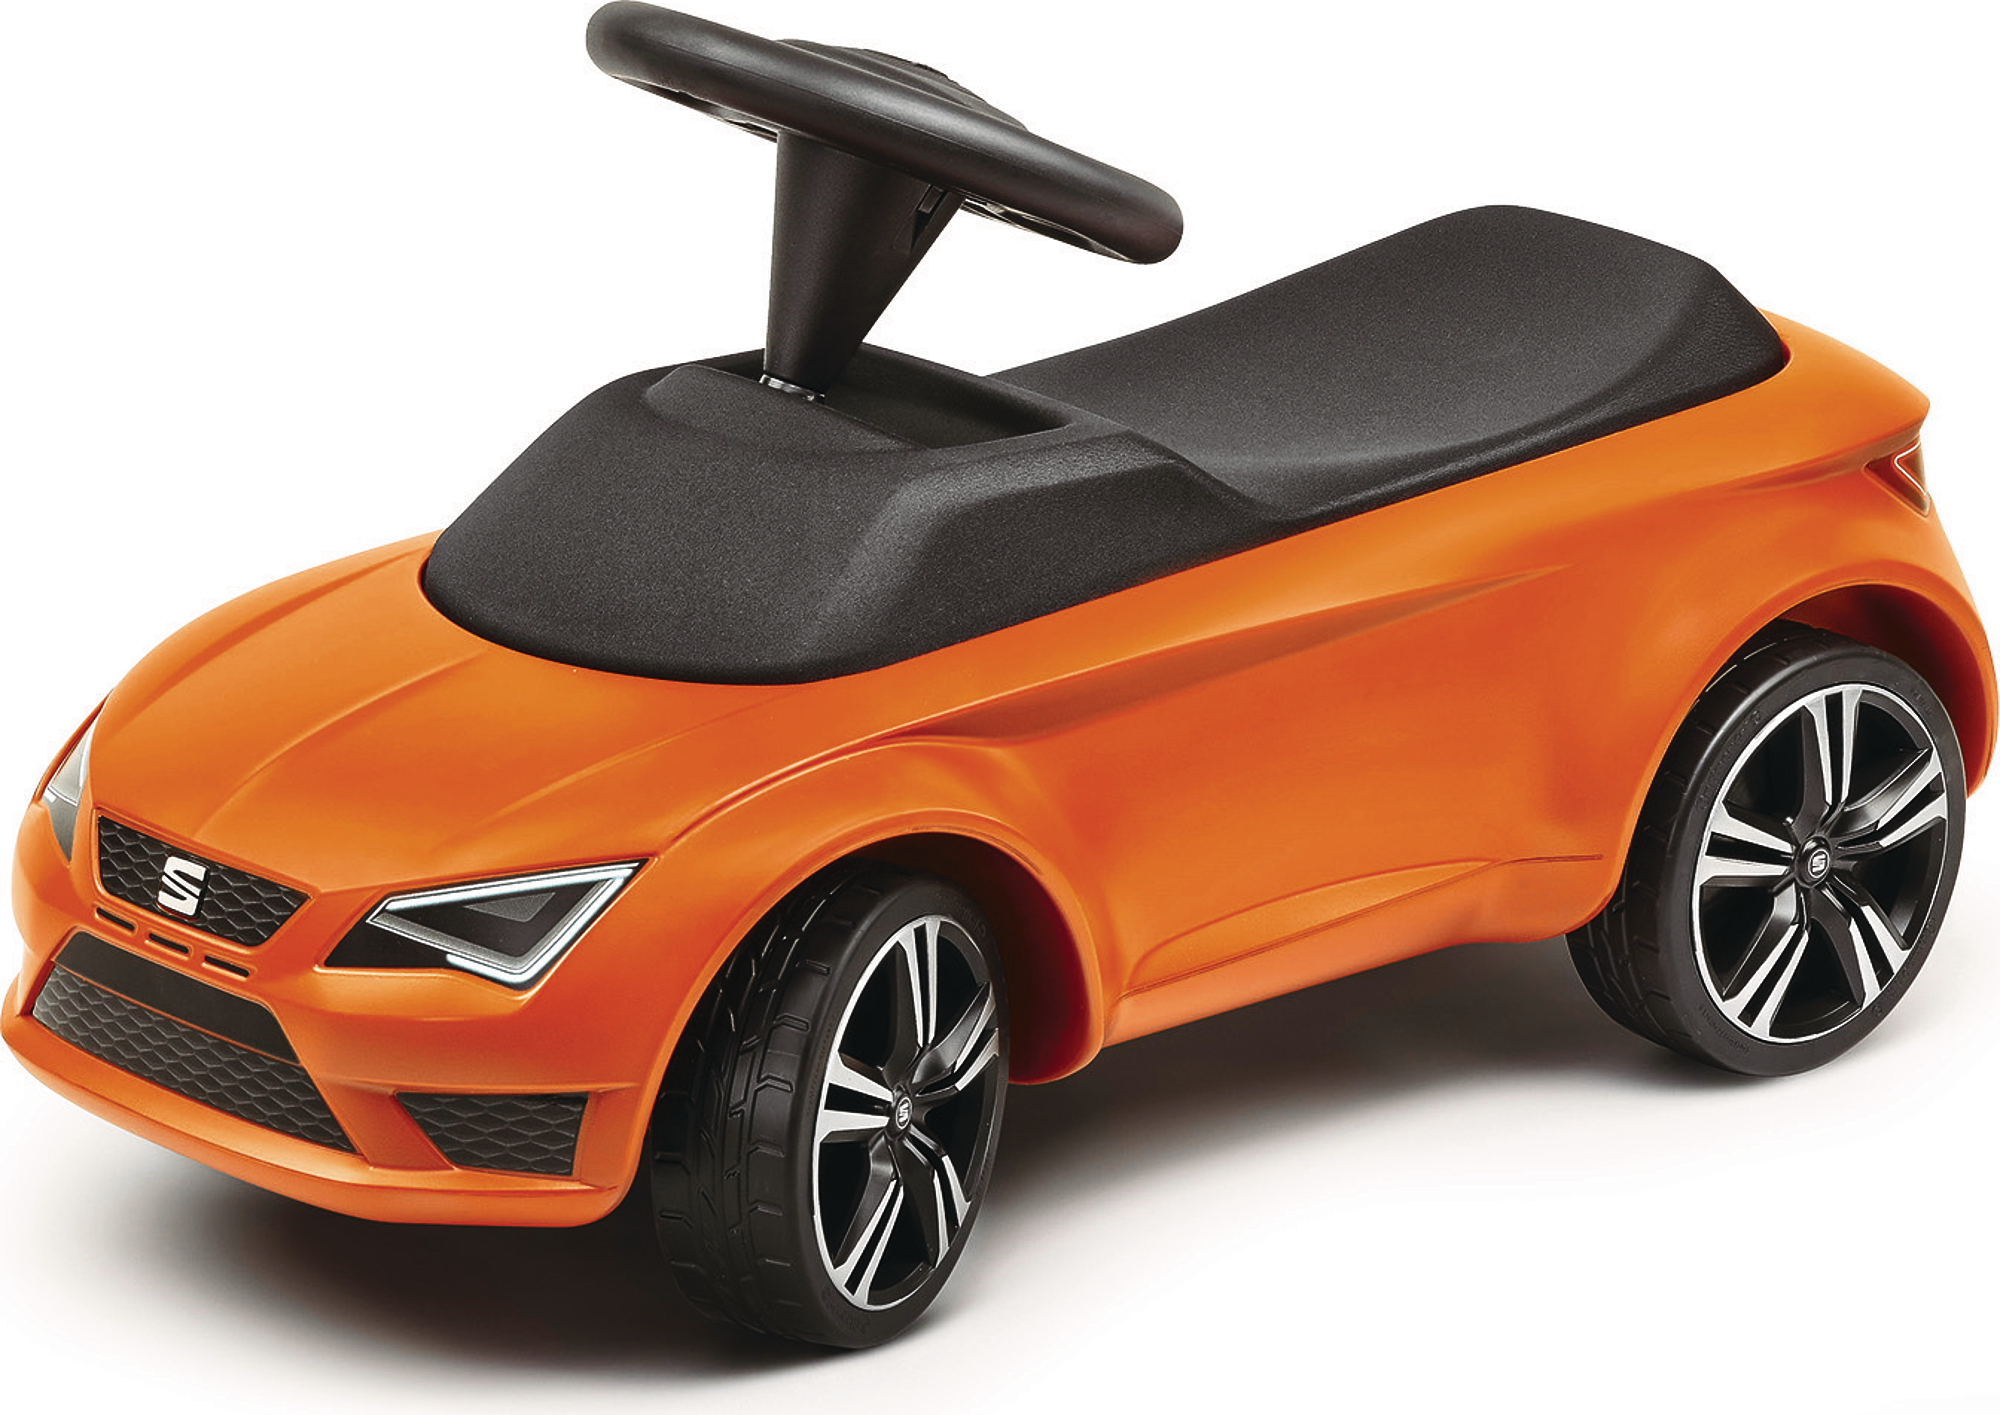 Seat - Voiture enfant SEAT Orange